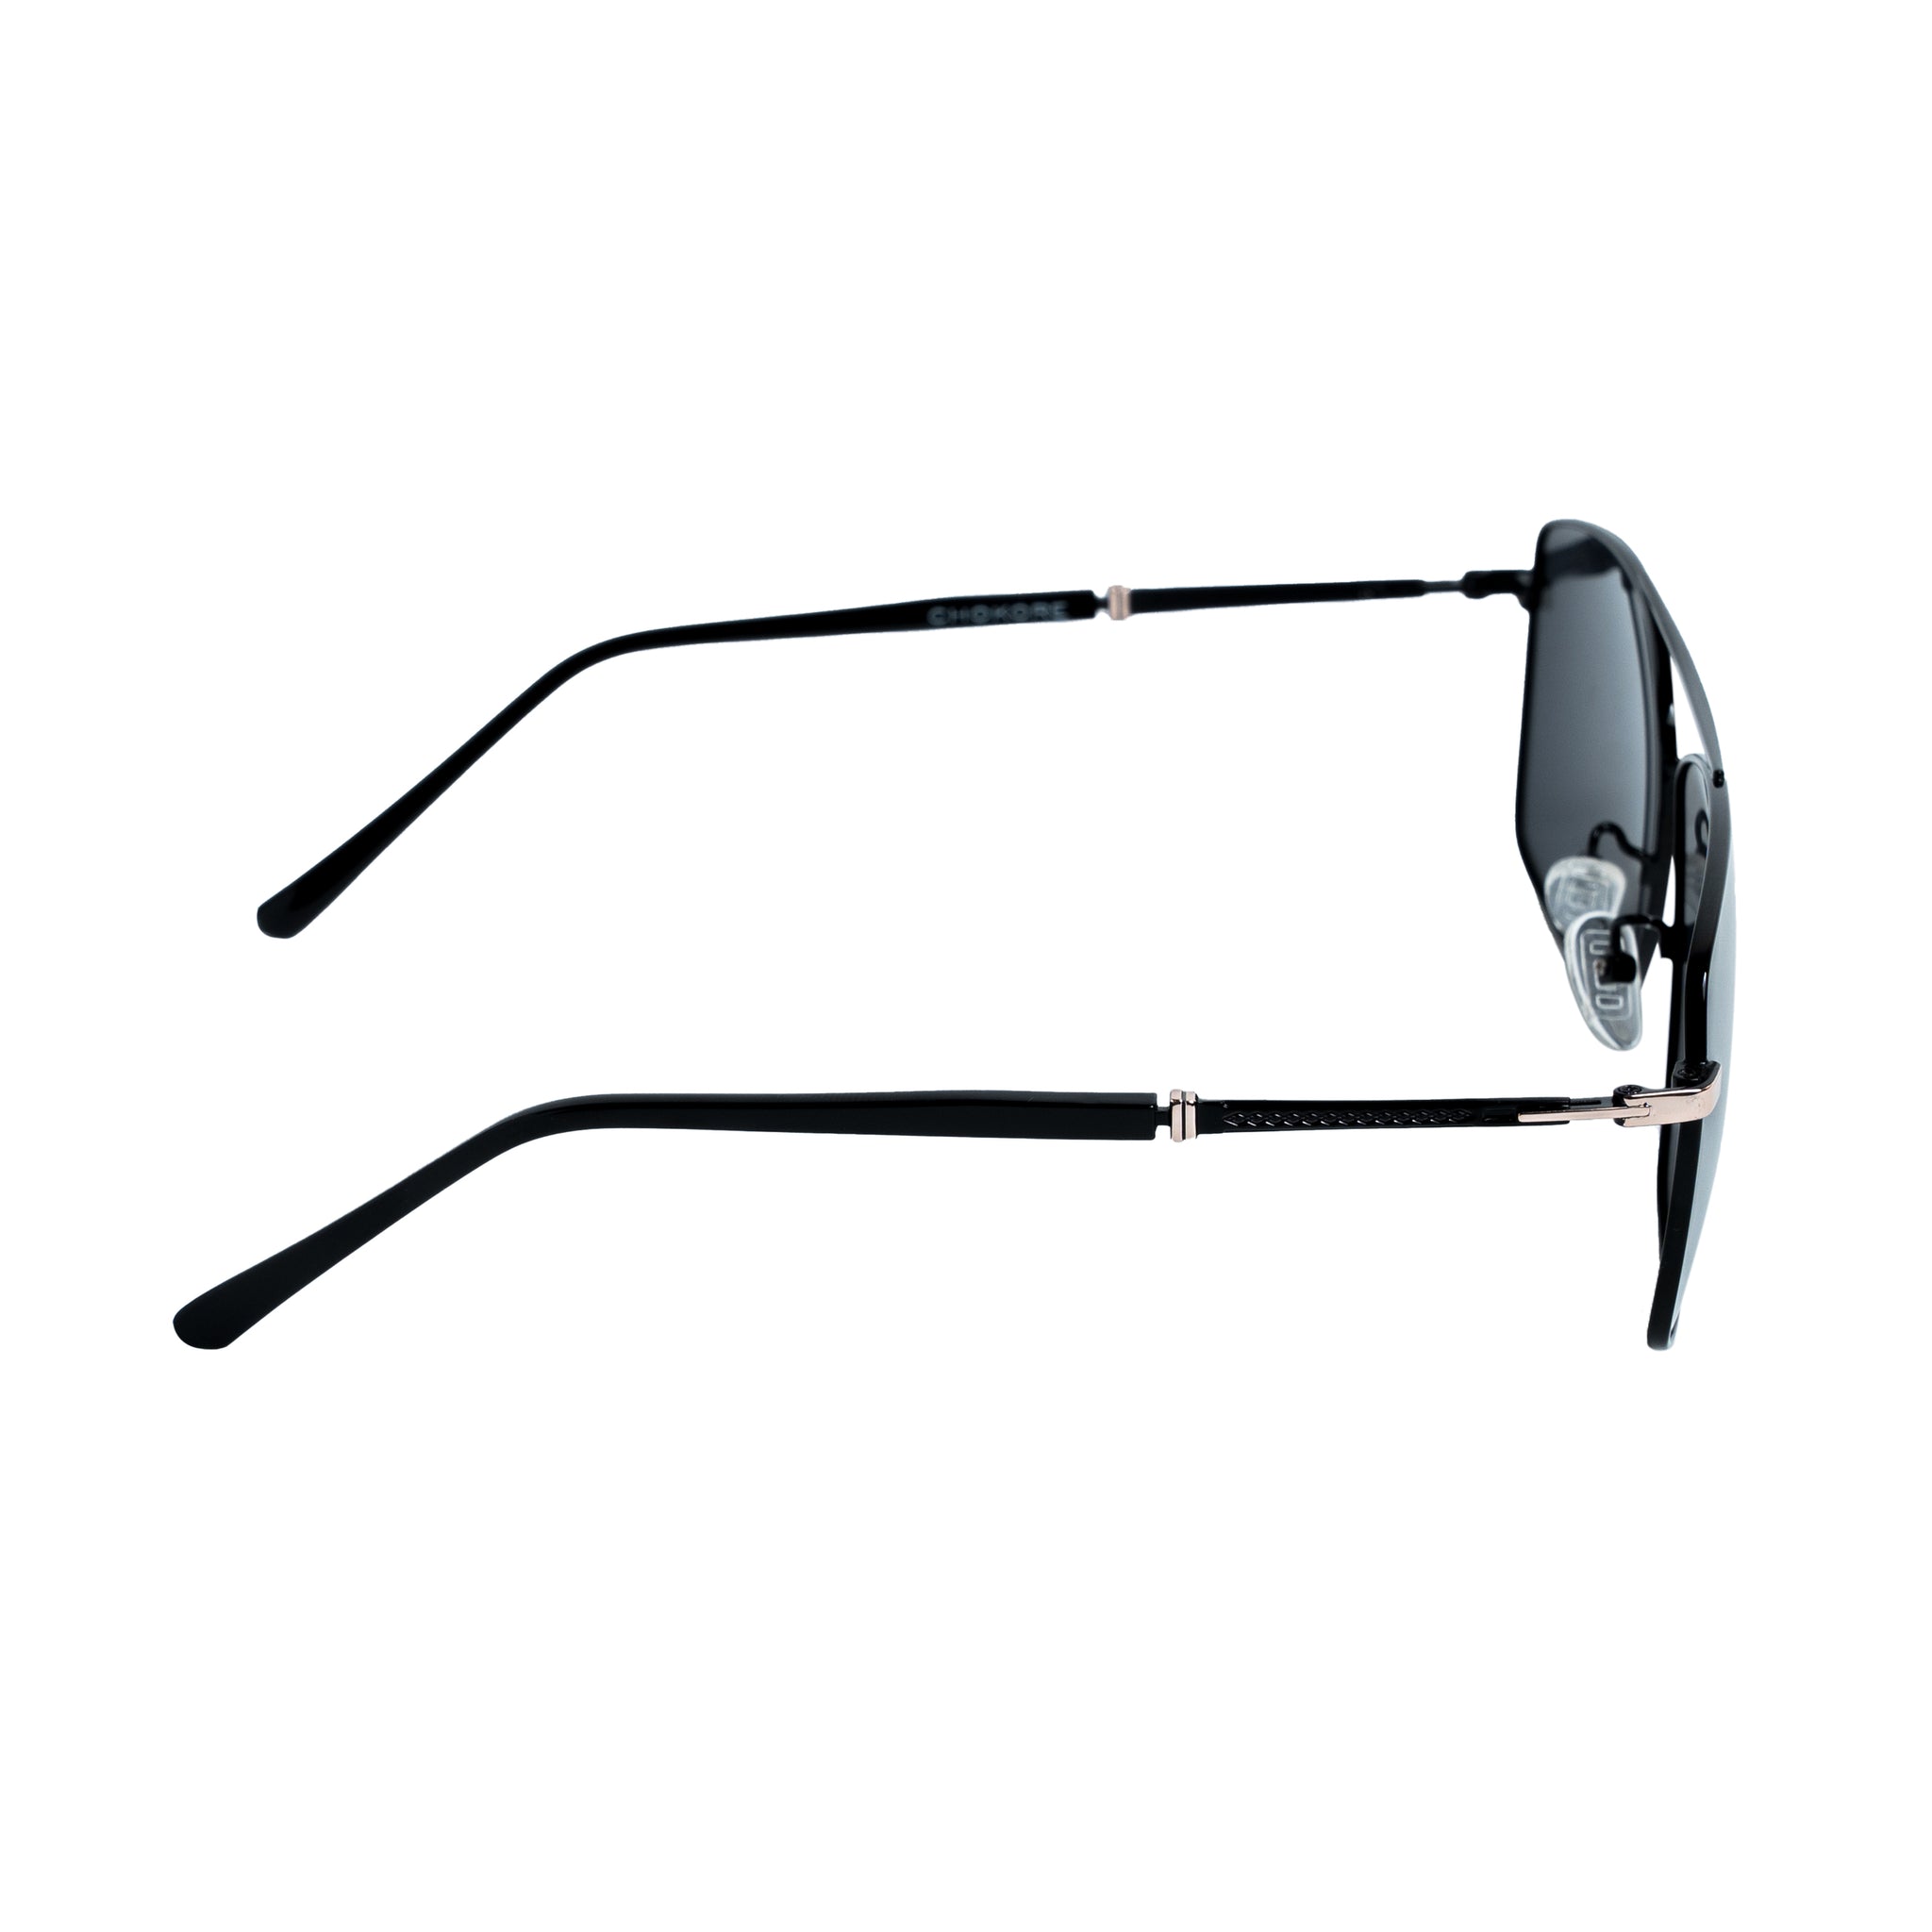 Chokore Sleek Rectangular Sunglasses with UV Protection (Black)